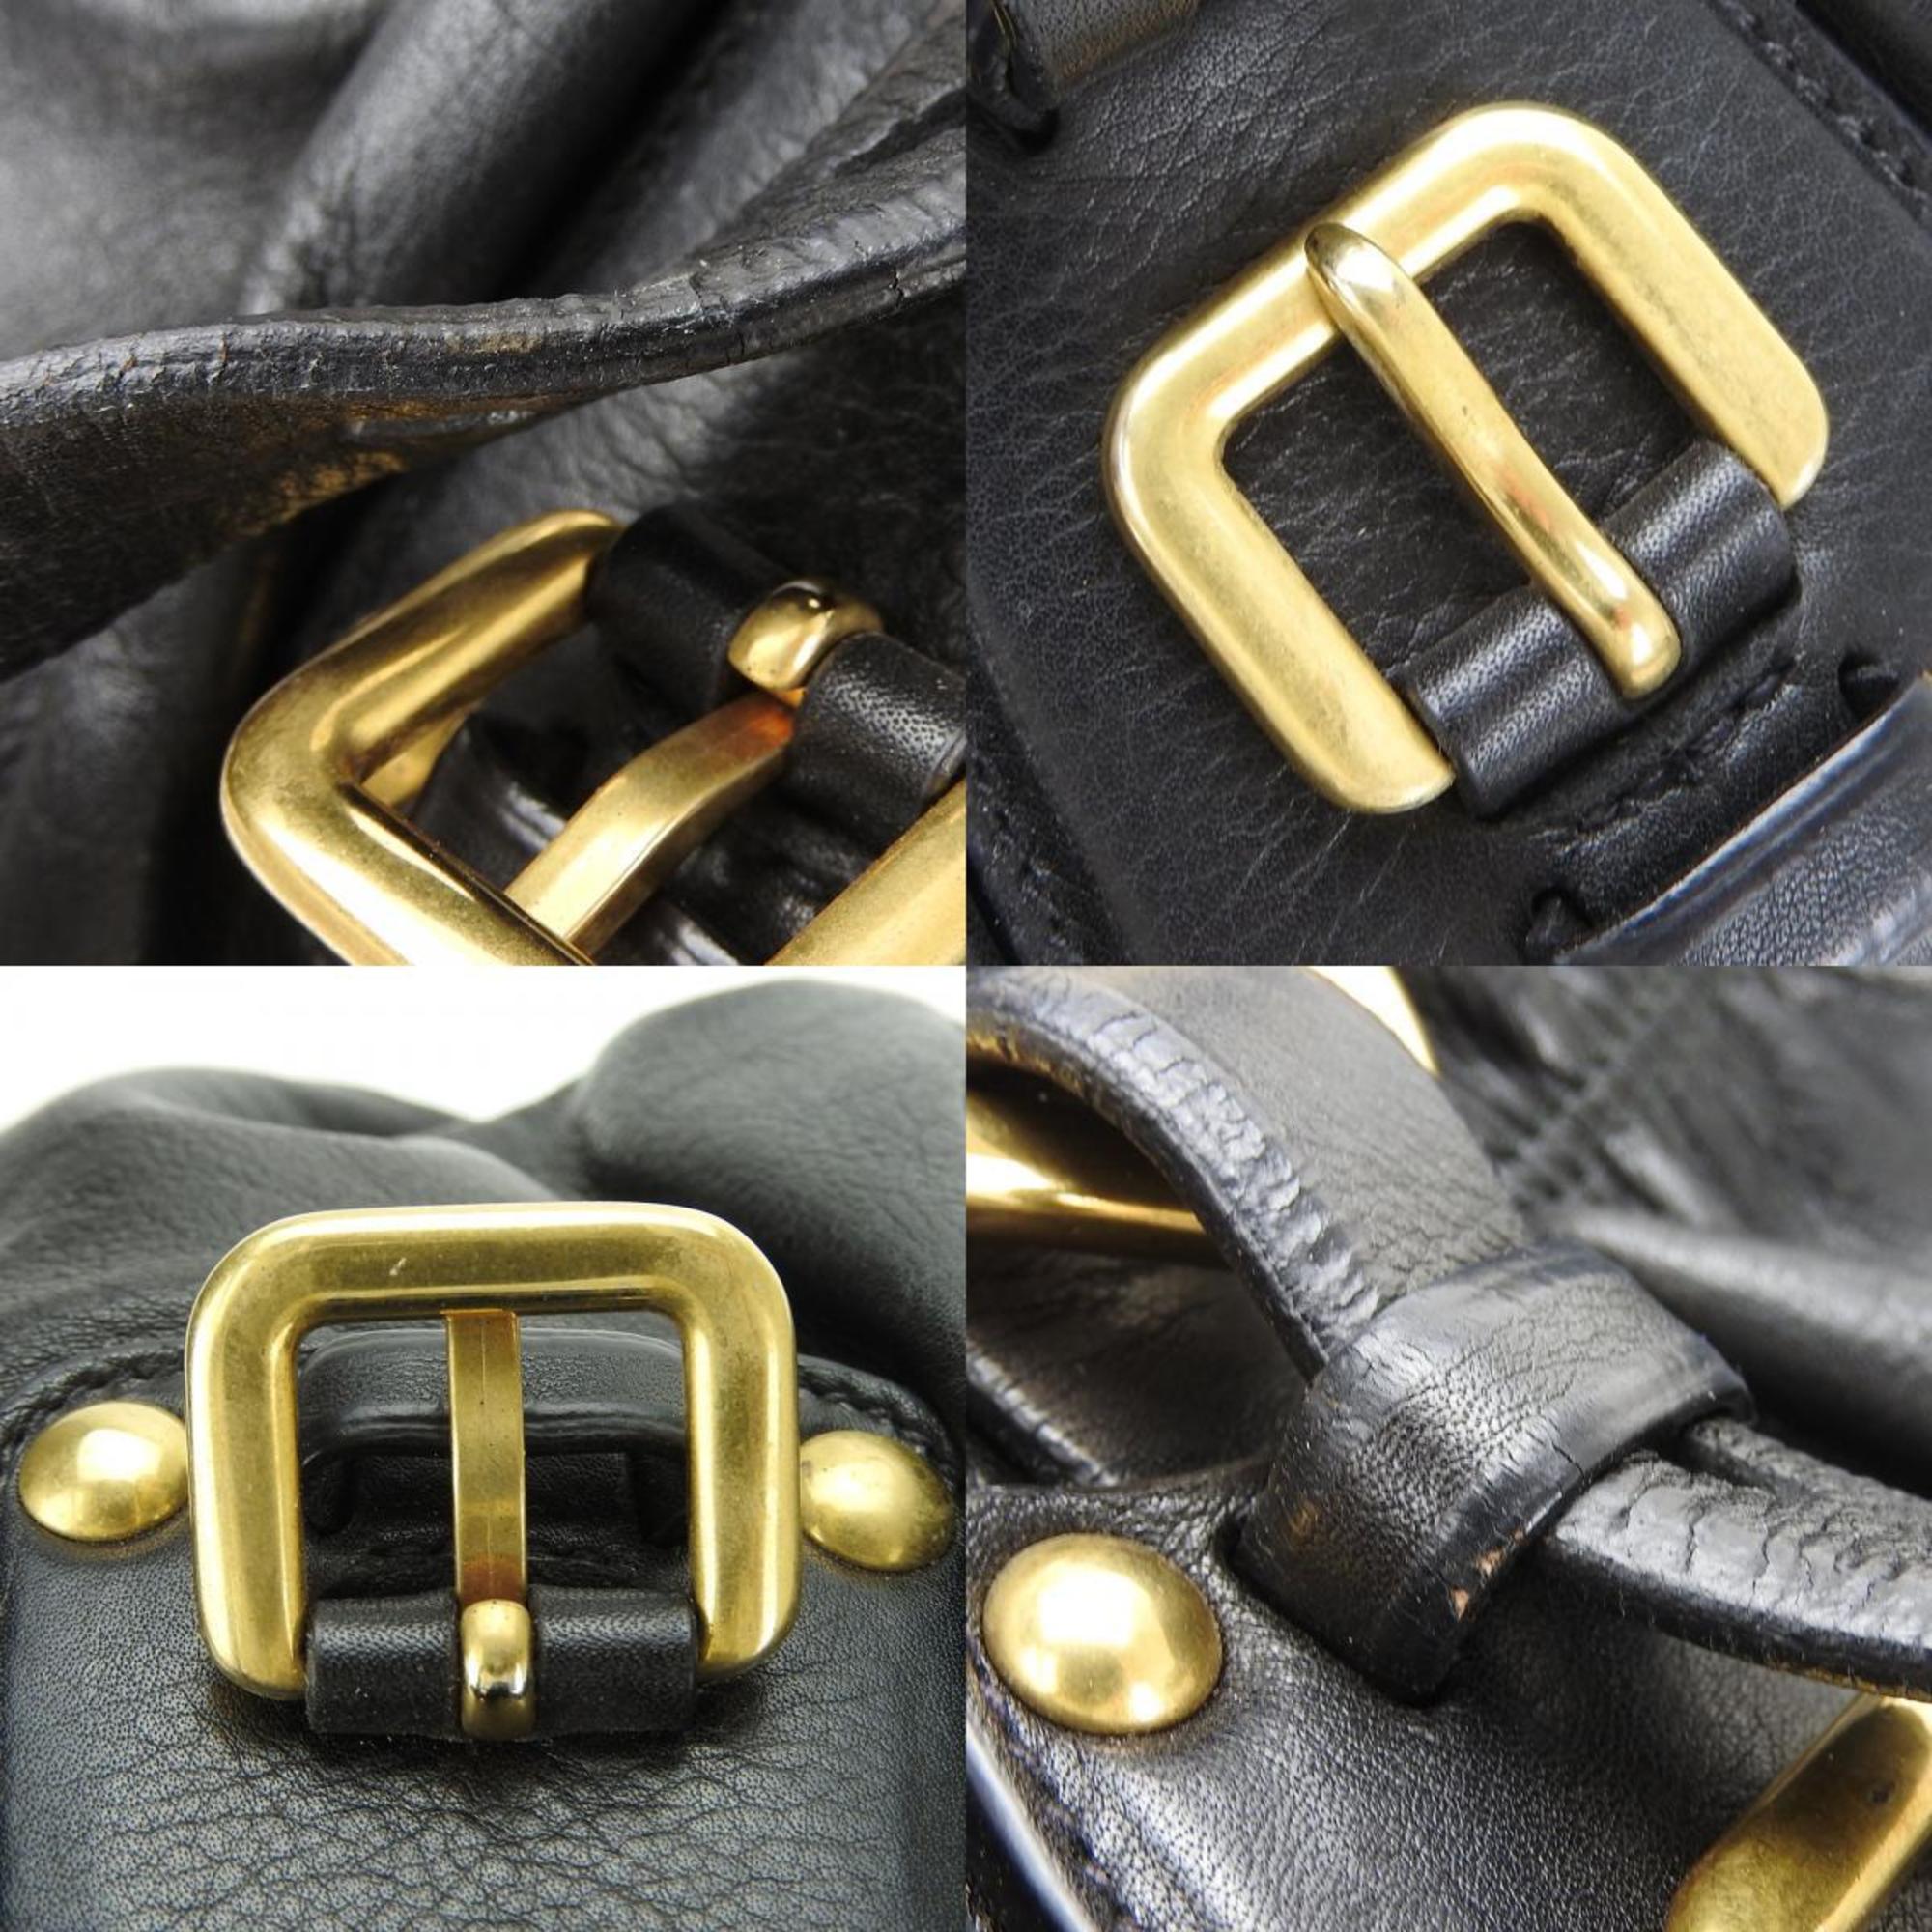 PRADA Prada Handbag Shoulder Leather Black Gold Women's Hand Bag